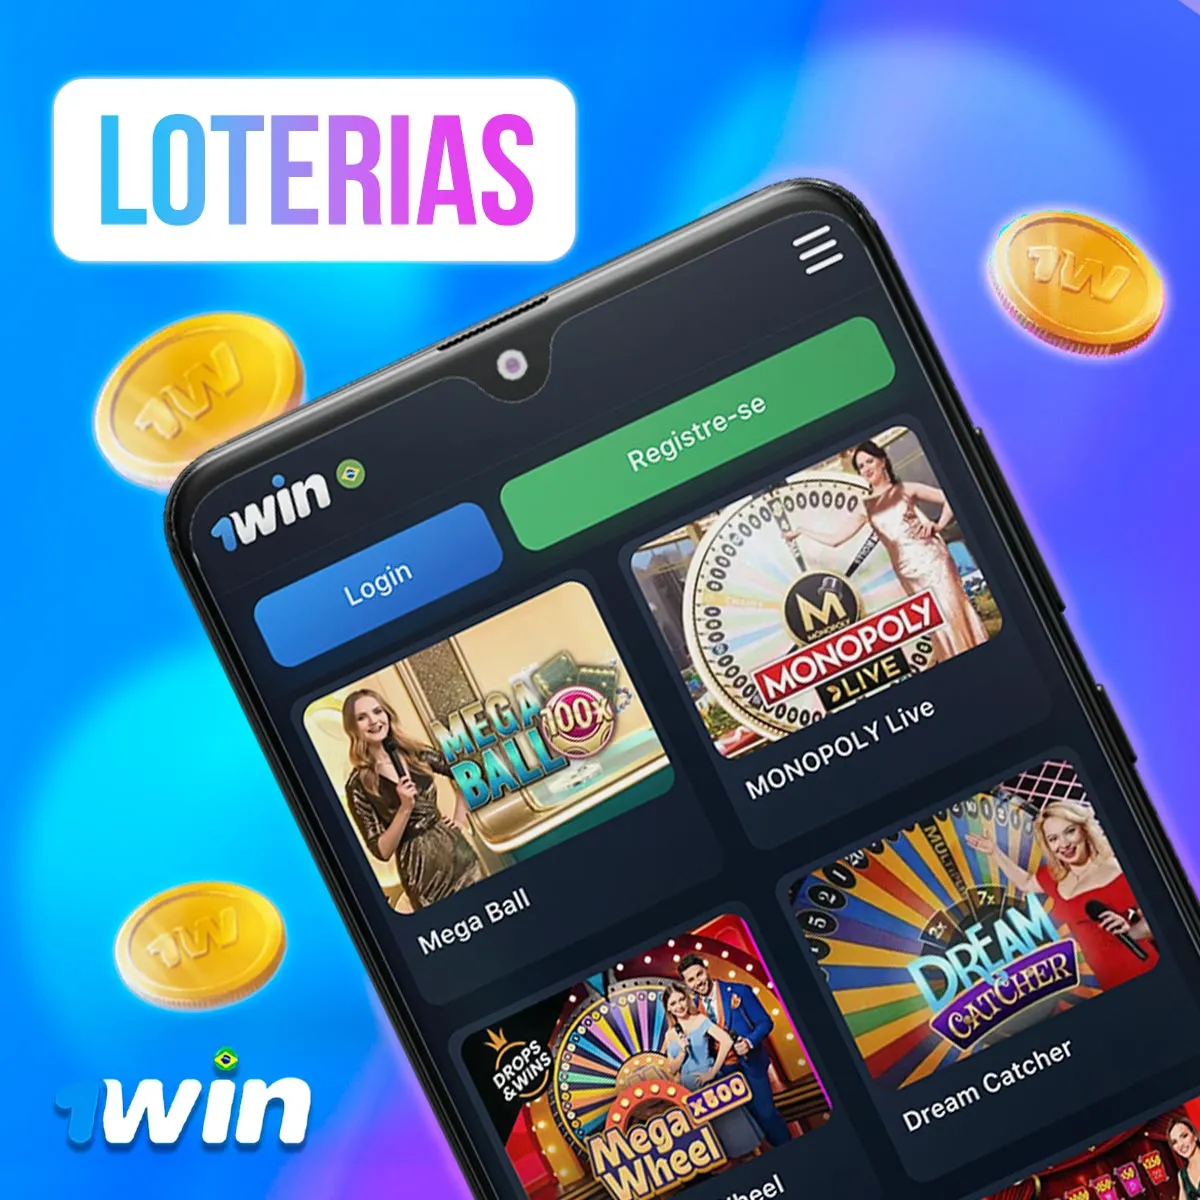 Loterias no aplicativo móvel 1win no mercado brasileiro